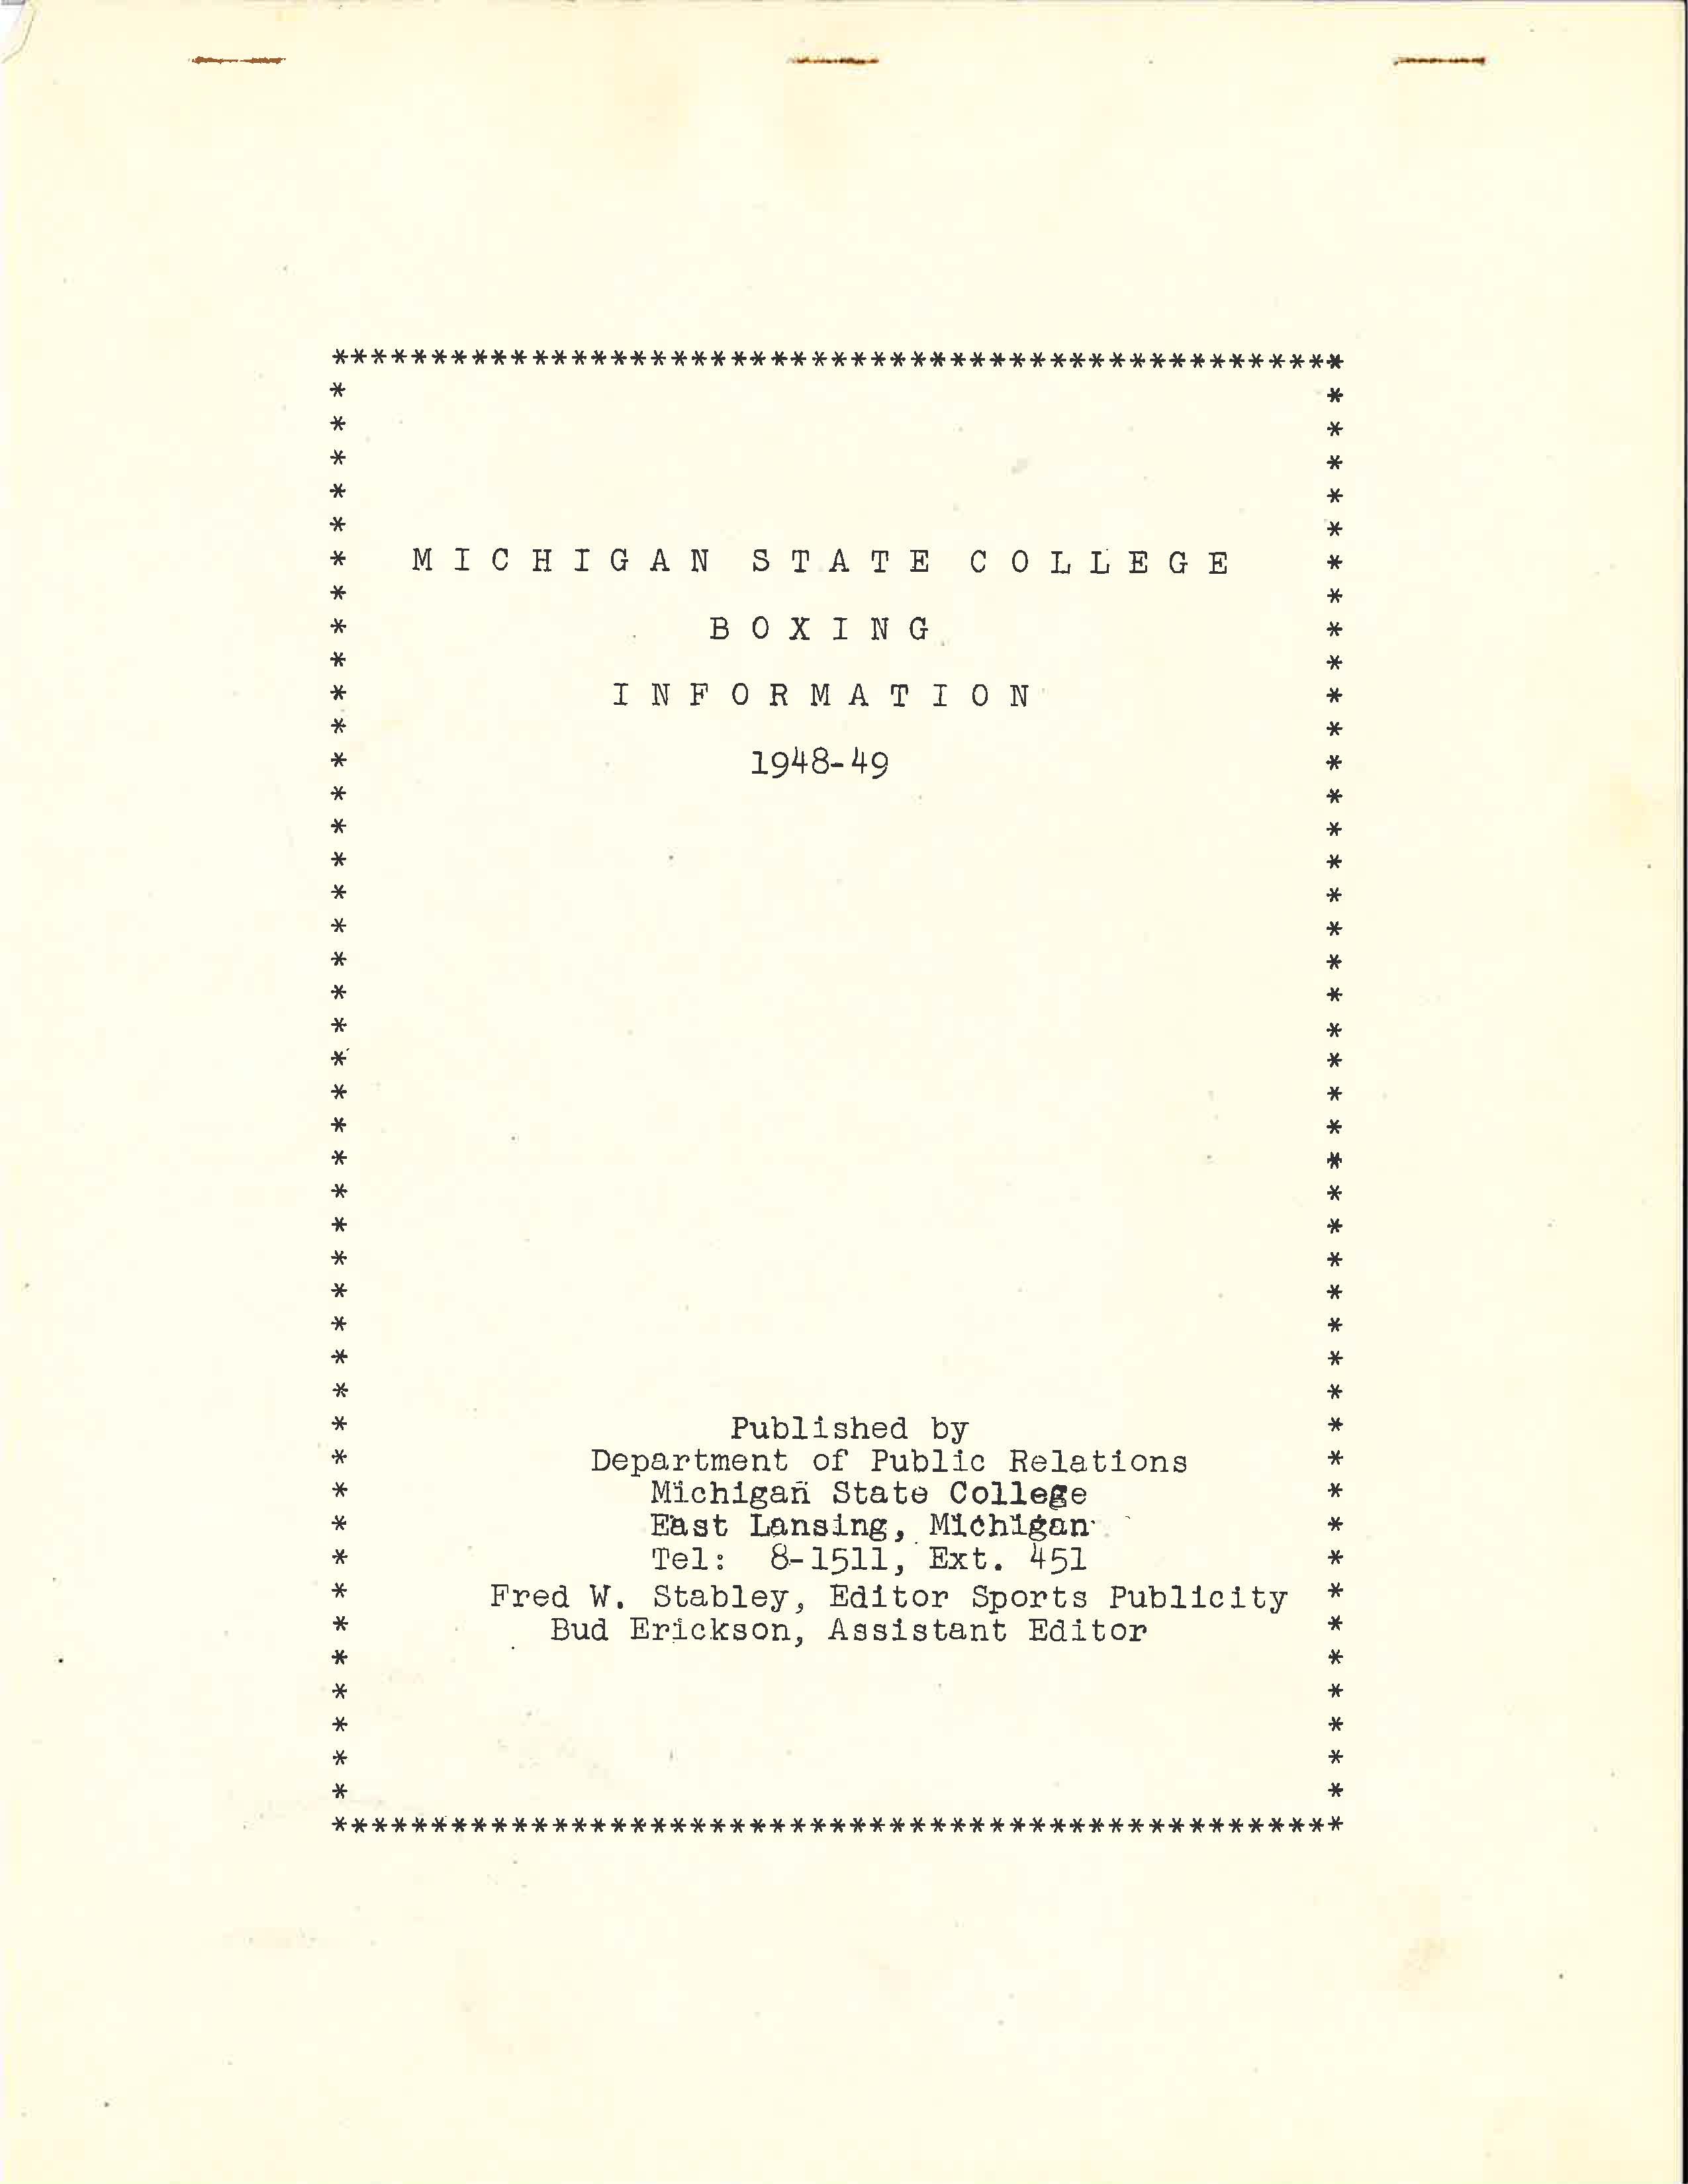 MSC Boxing Information, 1949